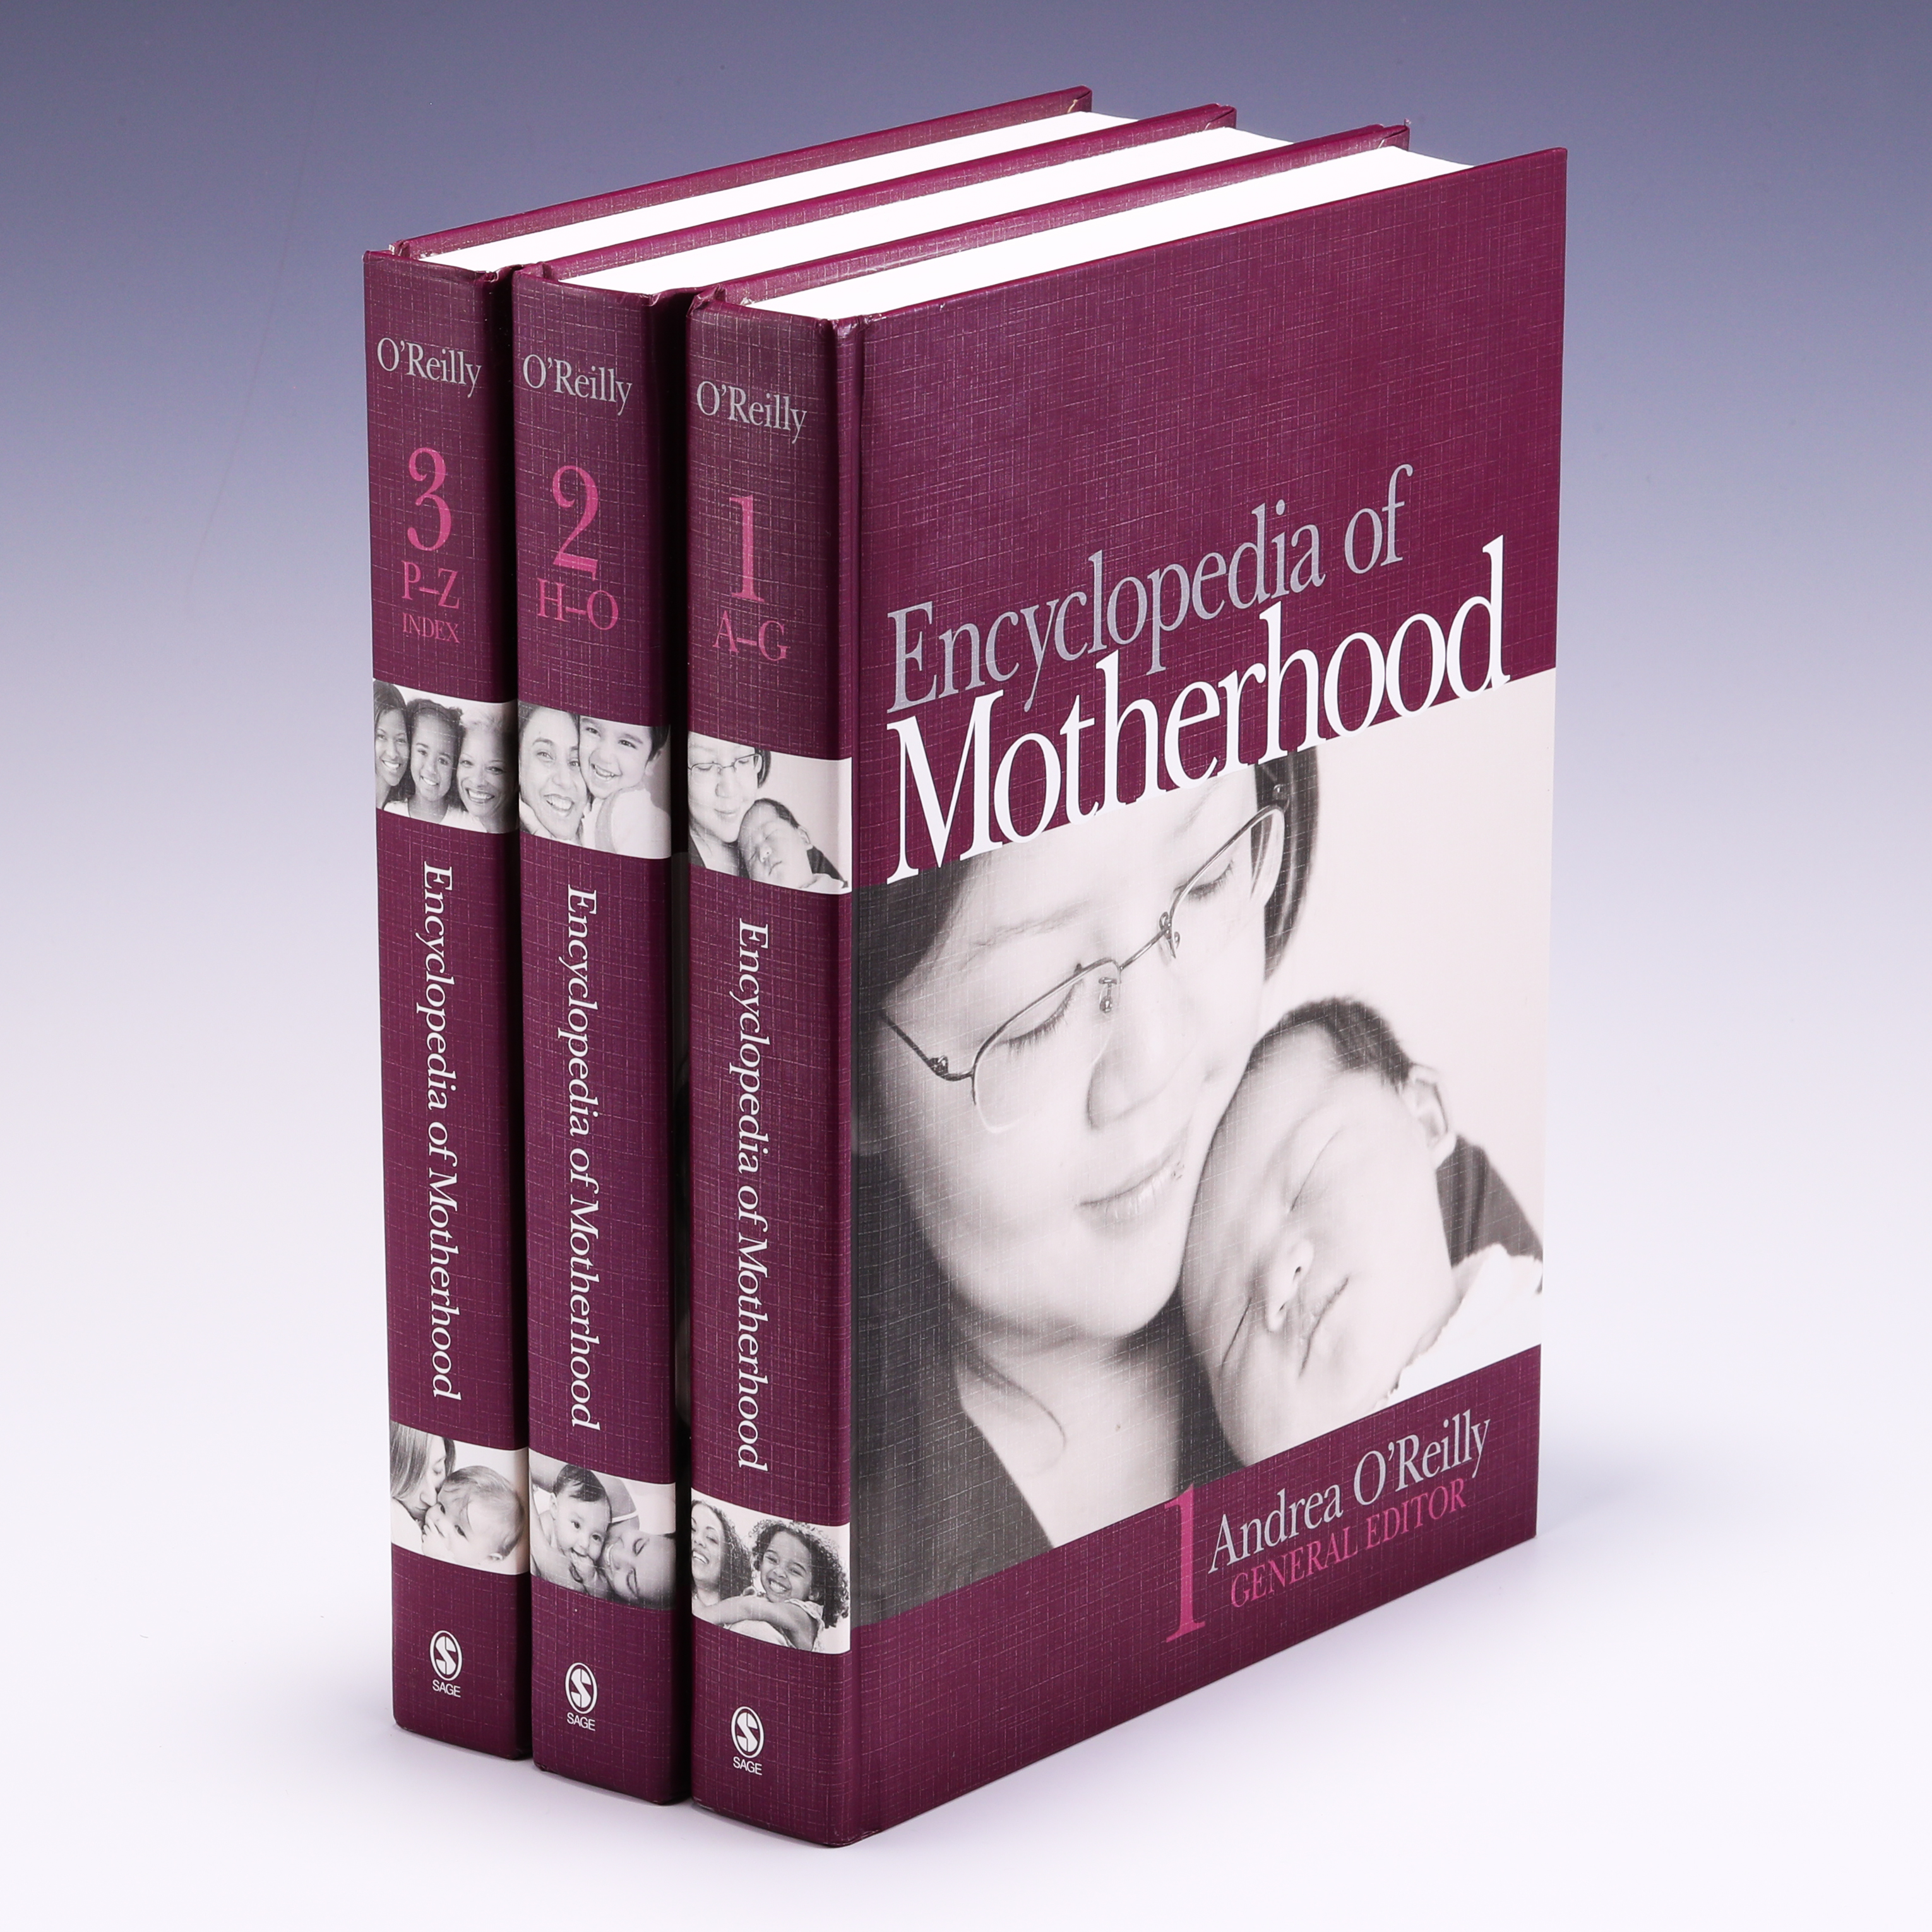 Encyclopedia of Motherhood - Andrea Oâ€²Reilly